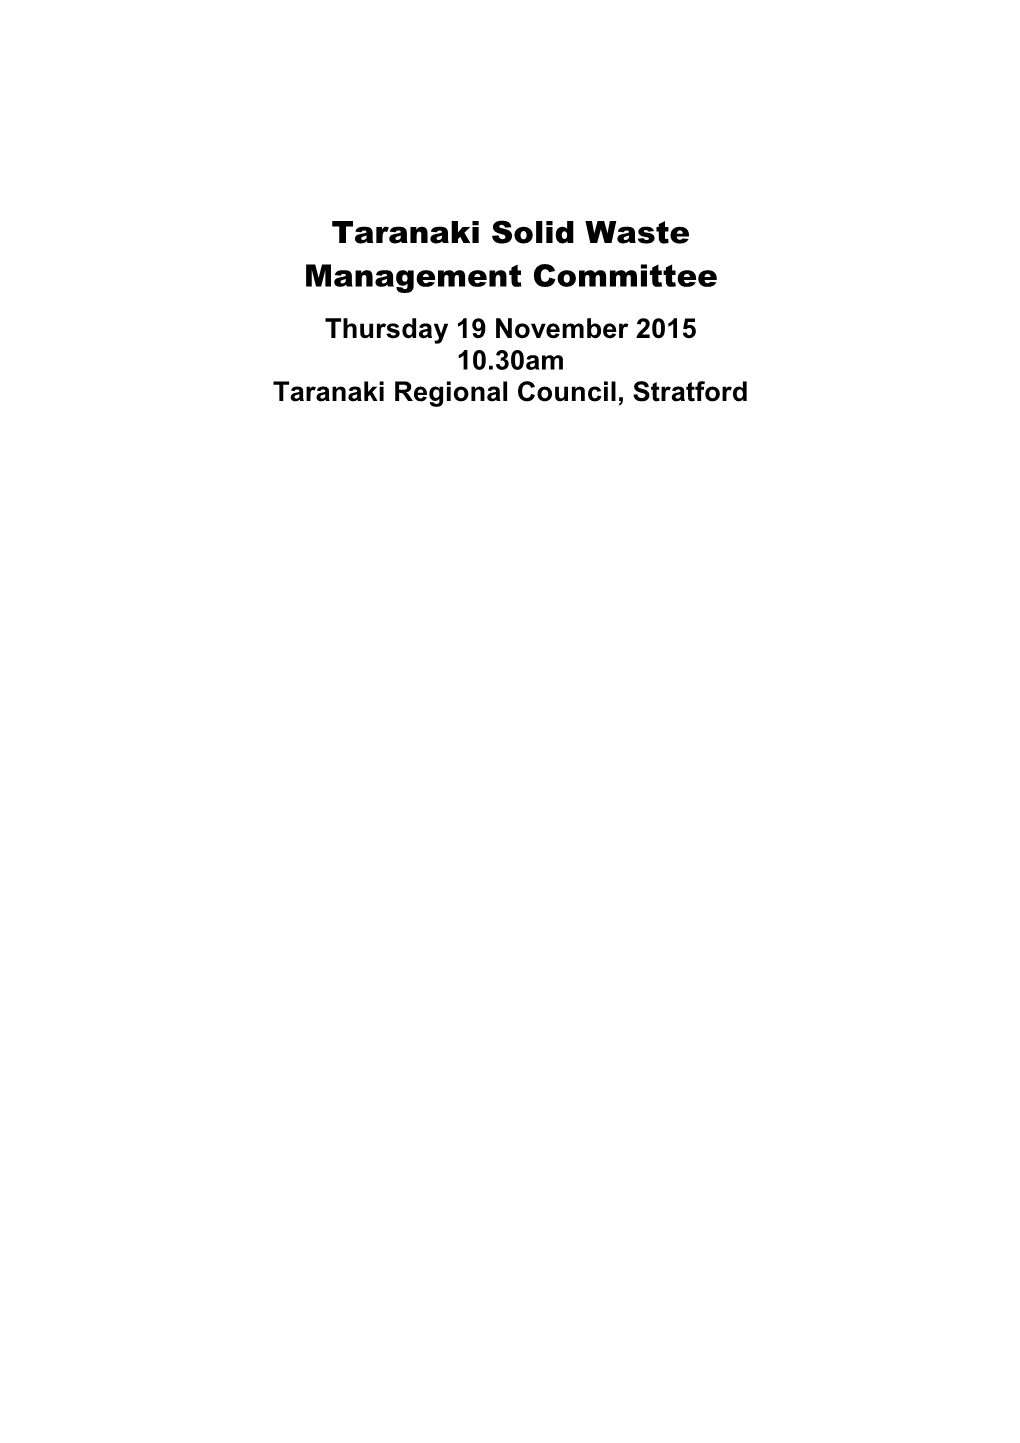 Taranaki Solid Waste Management Committee Agenda November 2015